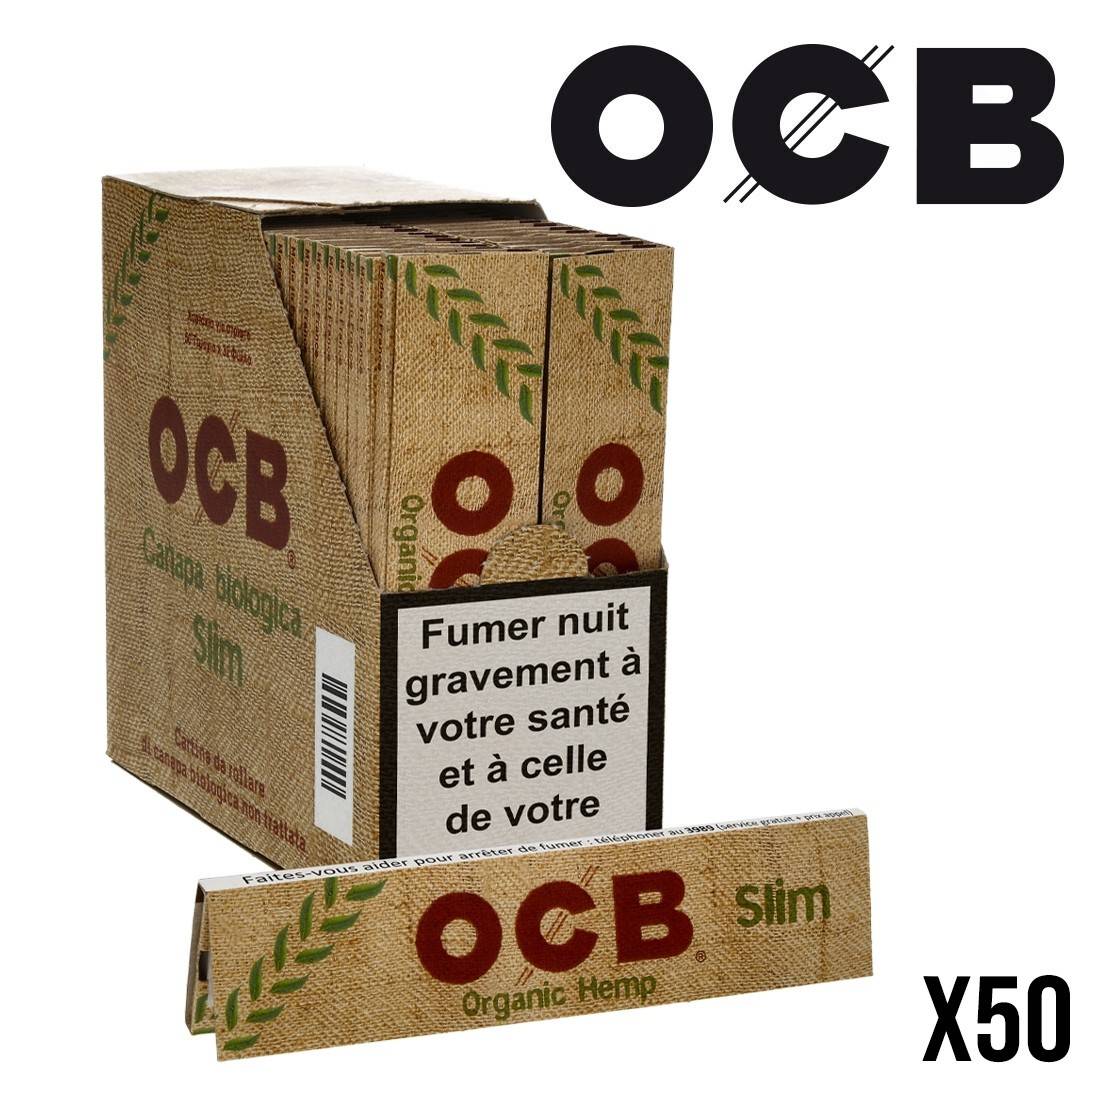 OCB Slim + Carton, Prix pas cher 1,5€